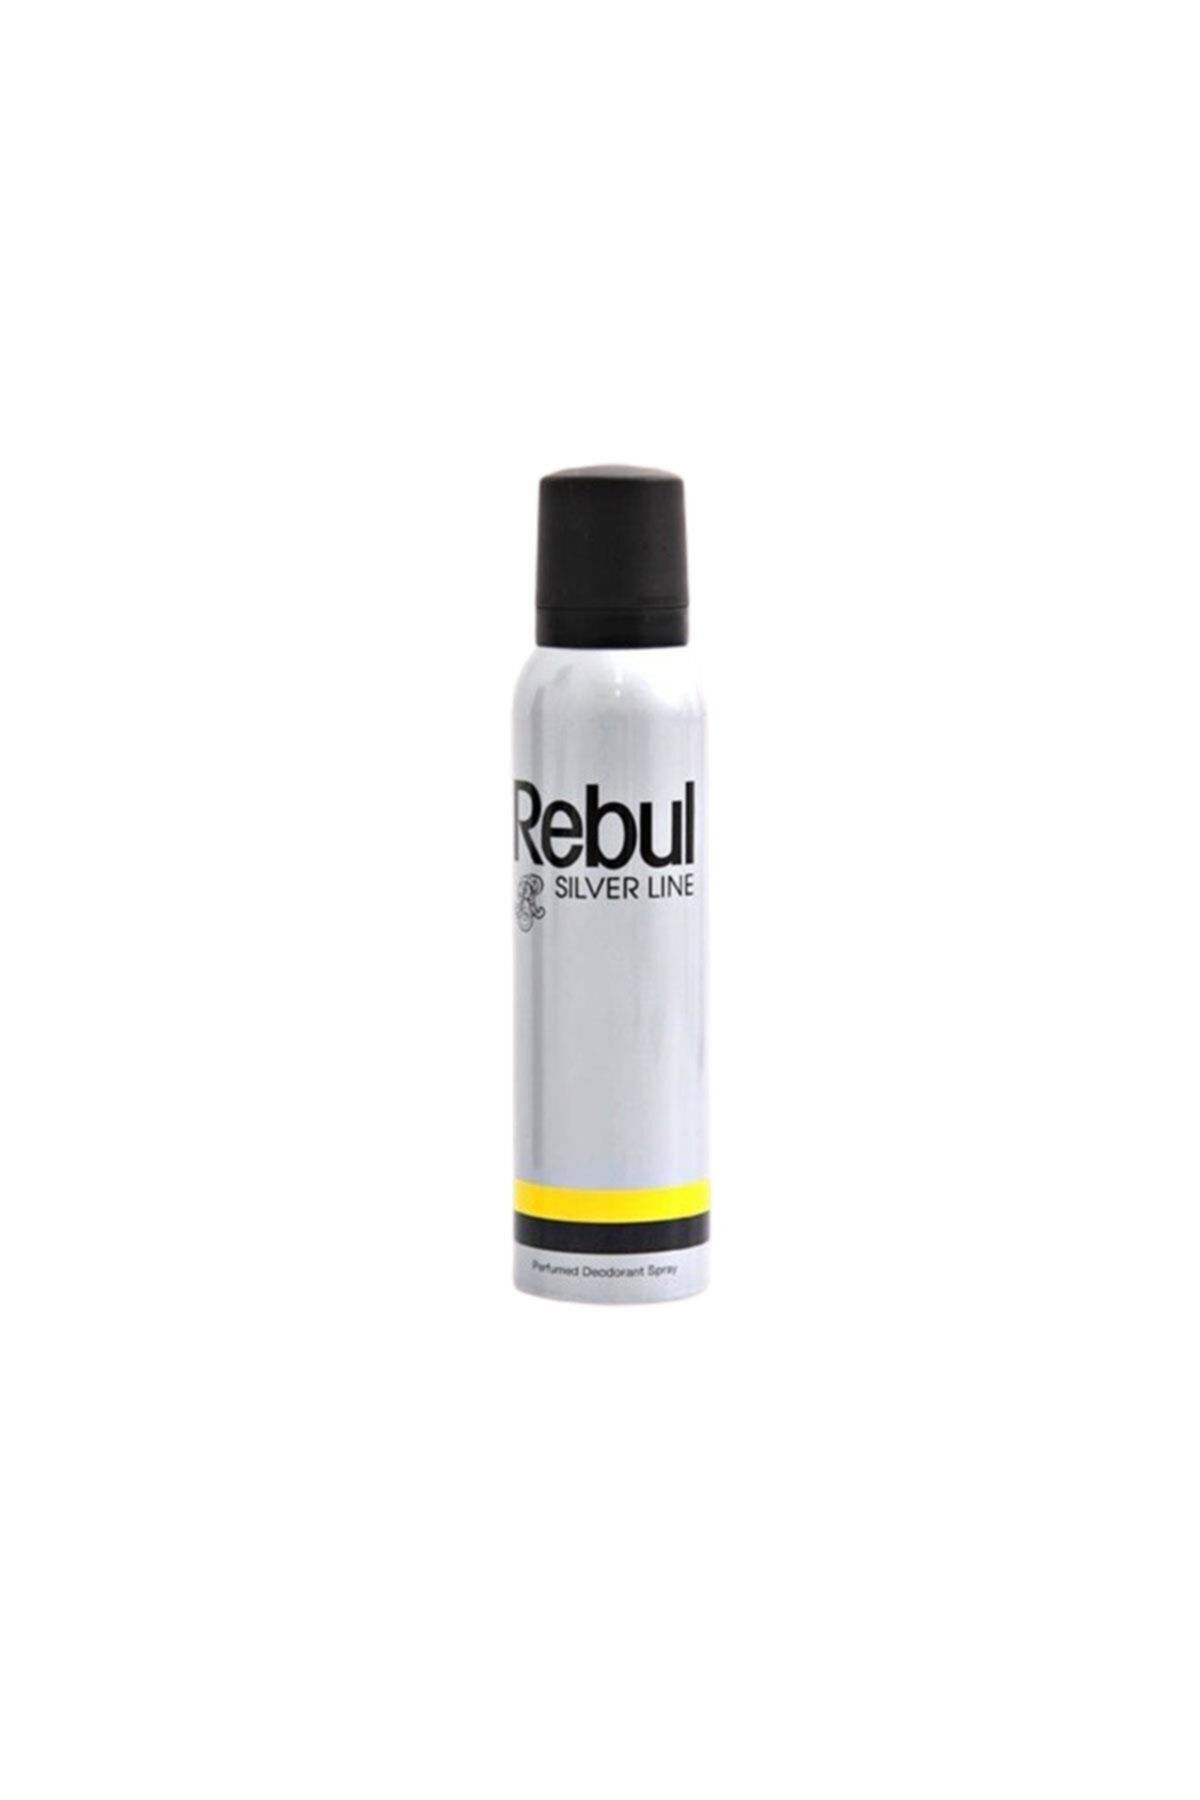 Rebul Silver Line Deodorant